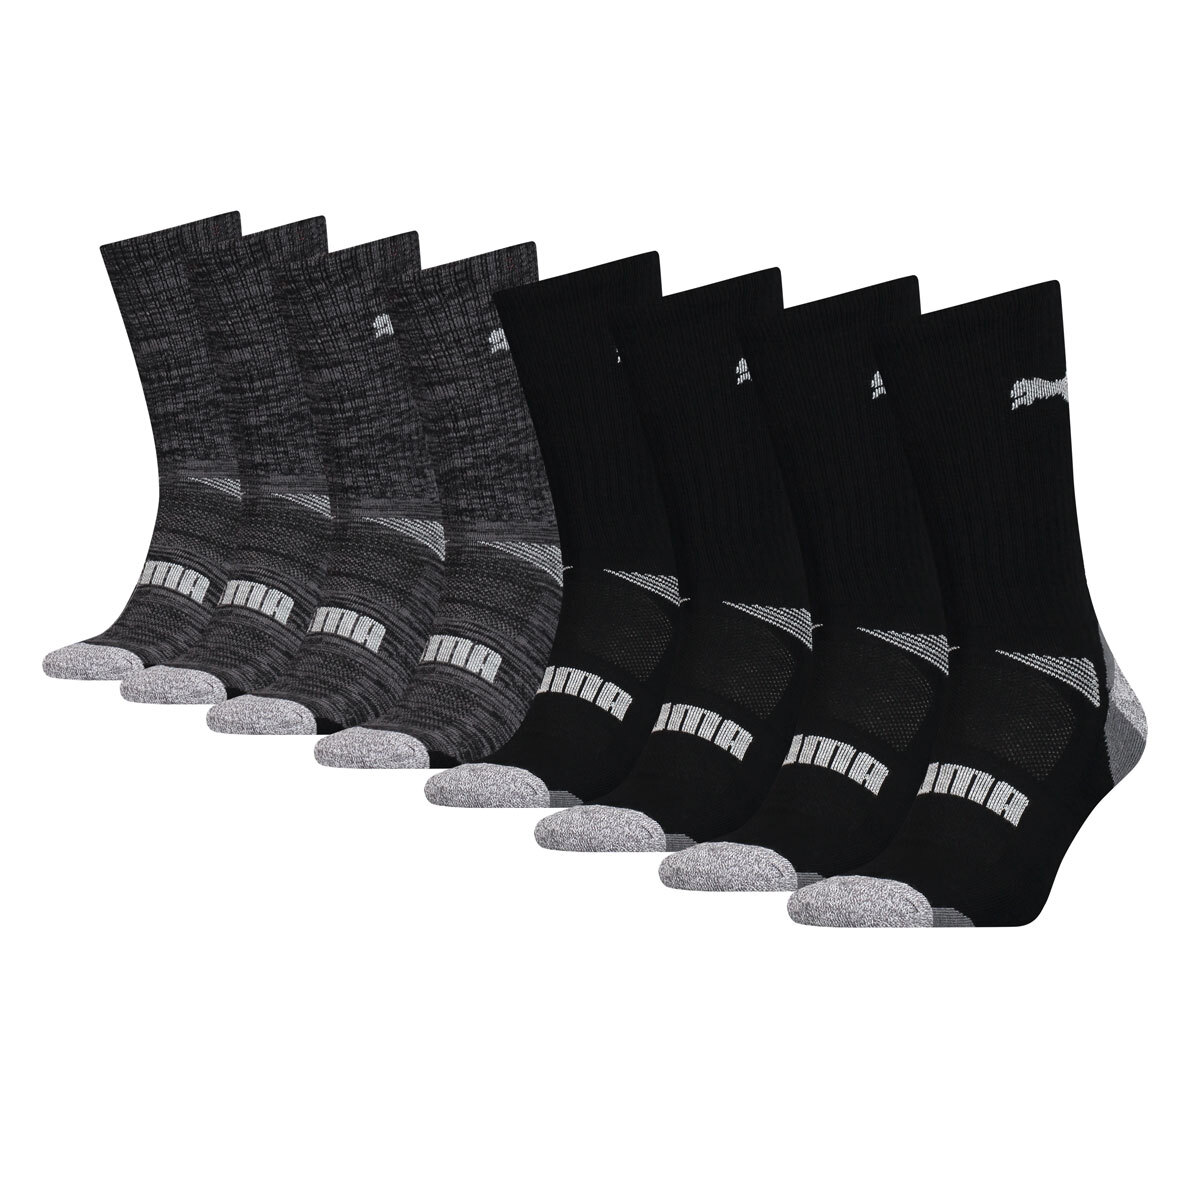 NWT PUMA 8 Pack Men's Cool Cell Crew Socks White/Black Shoe Size 6-12